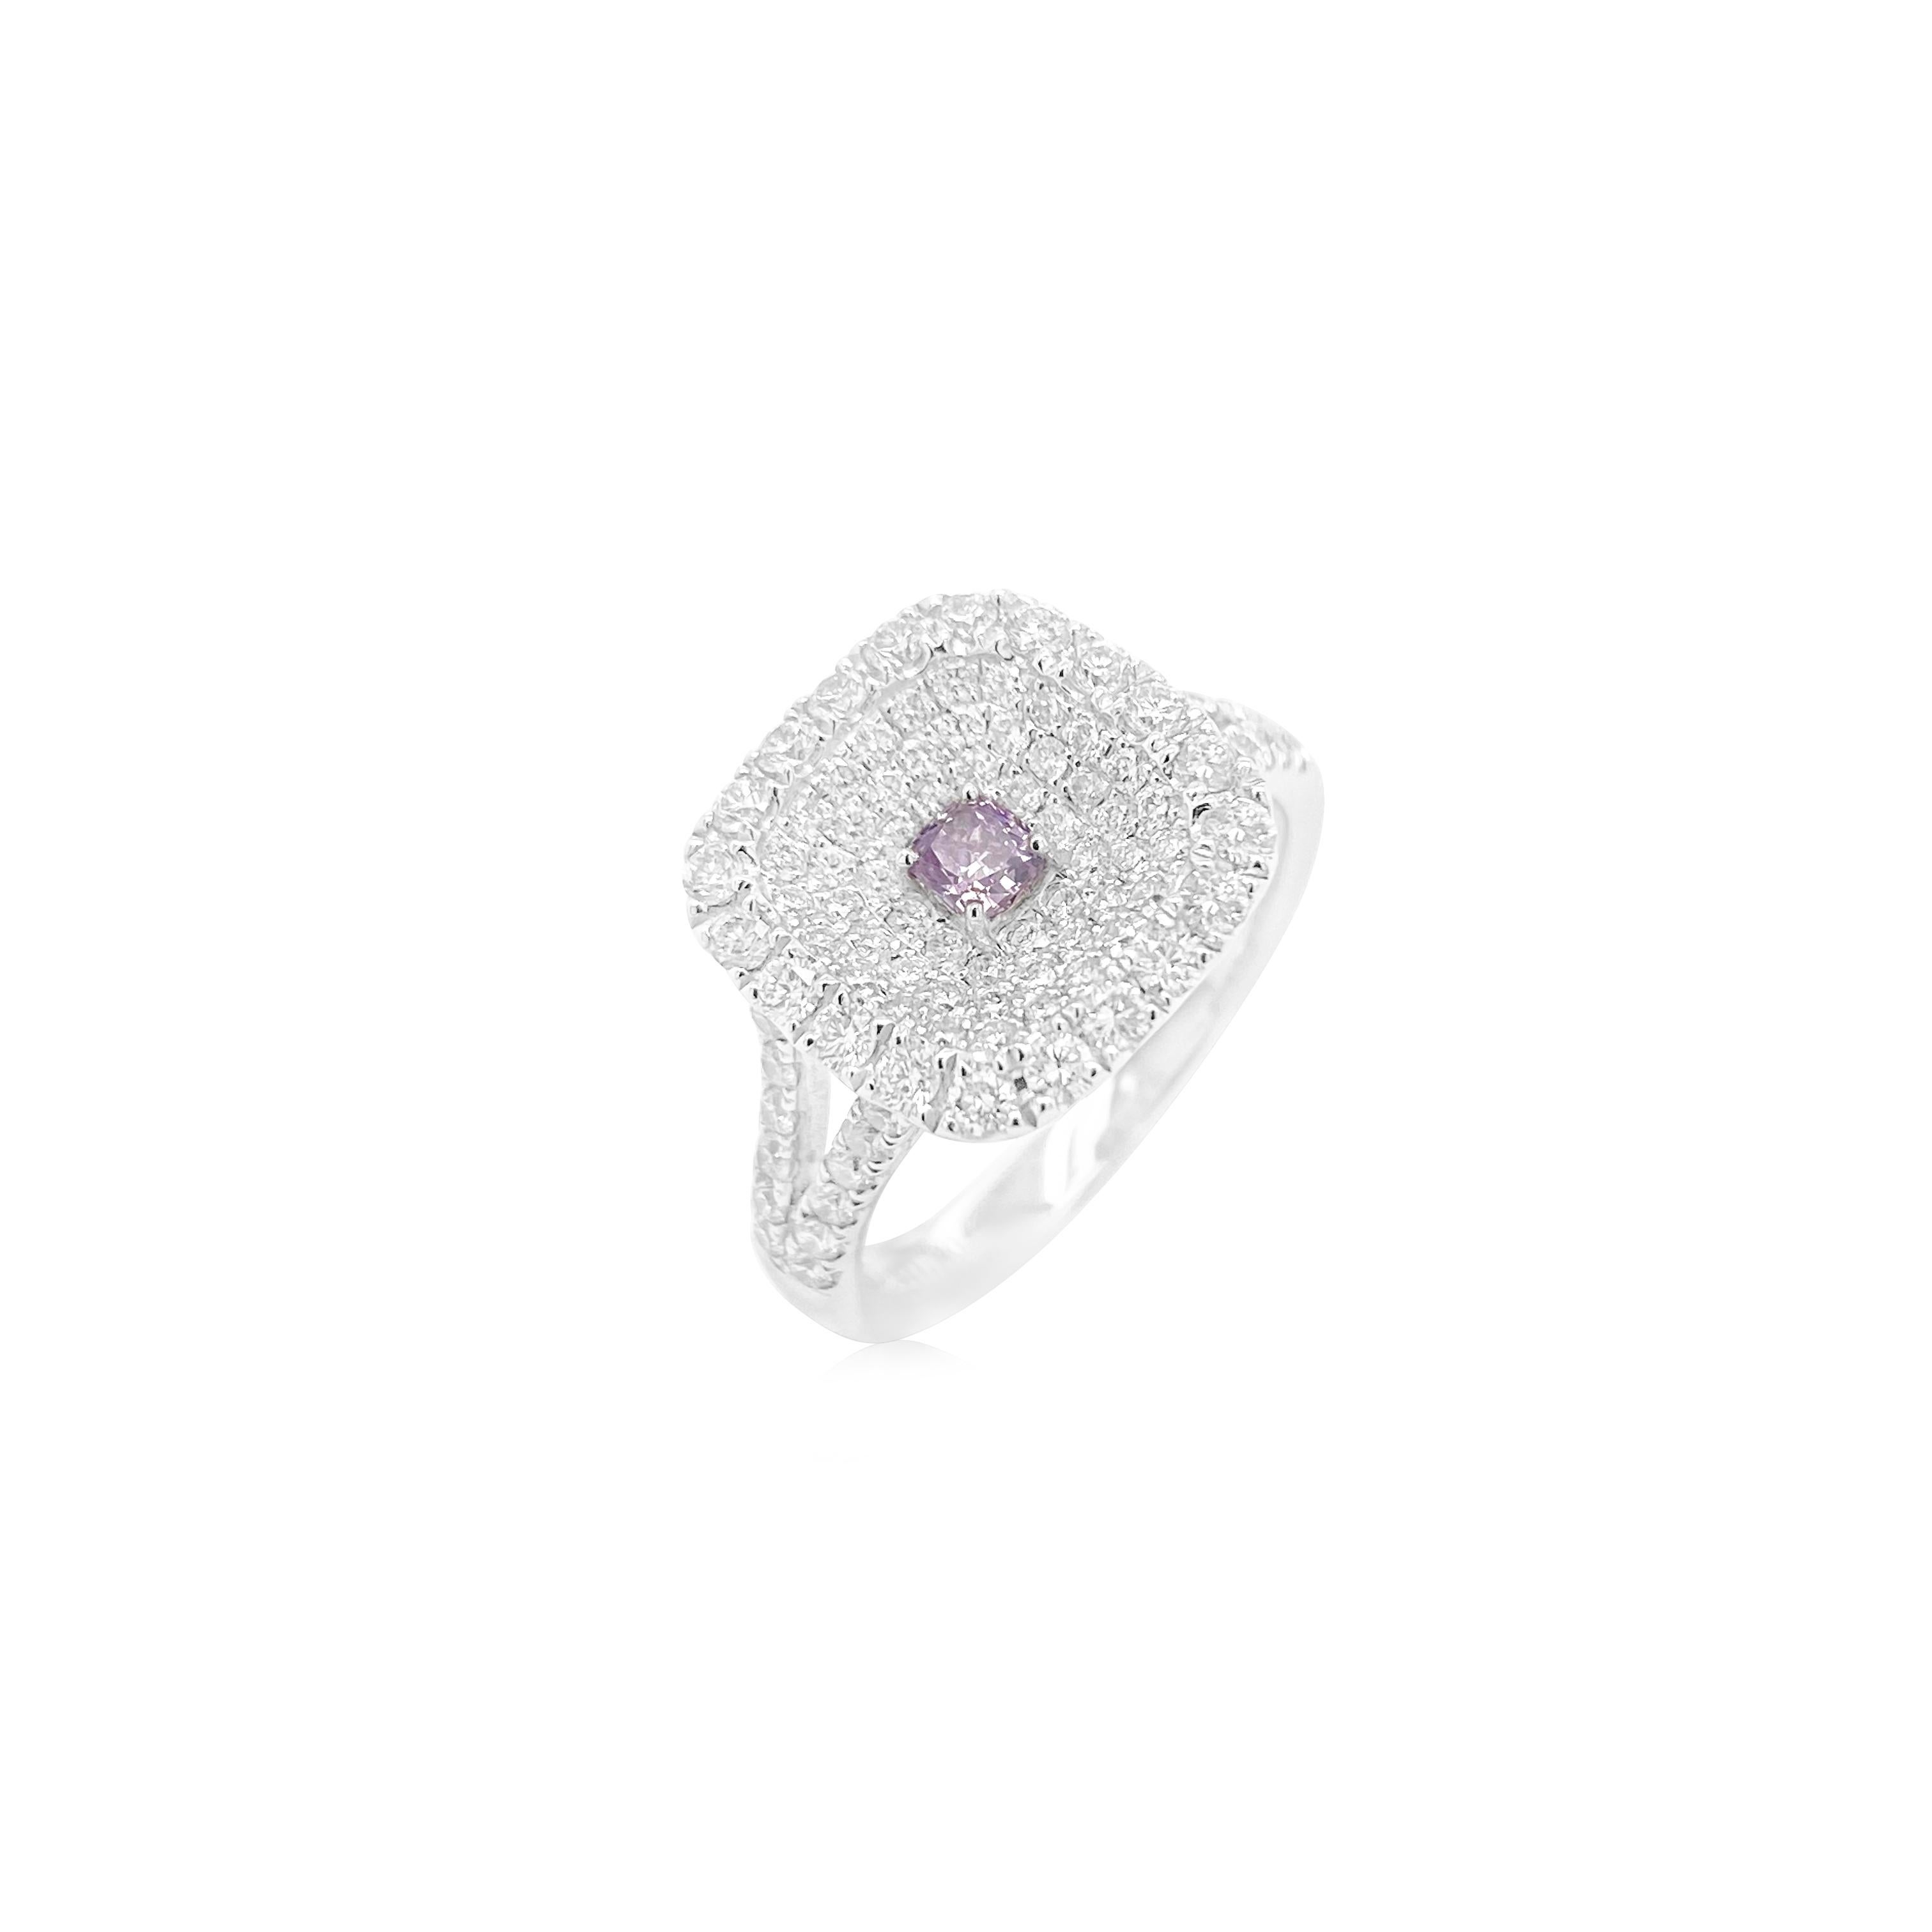 Contemporary Cocktail Ring with a Pinkish Purple Diamond and White diamonds